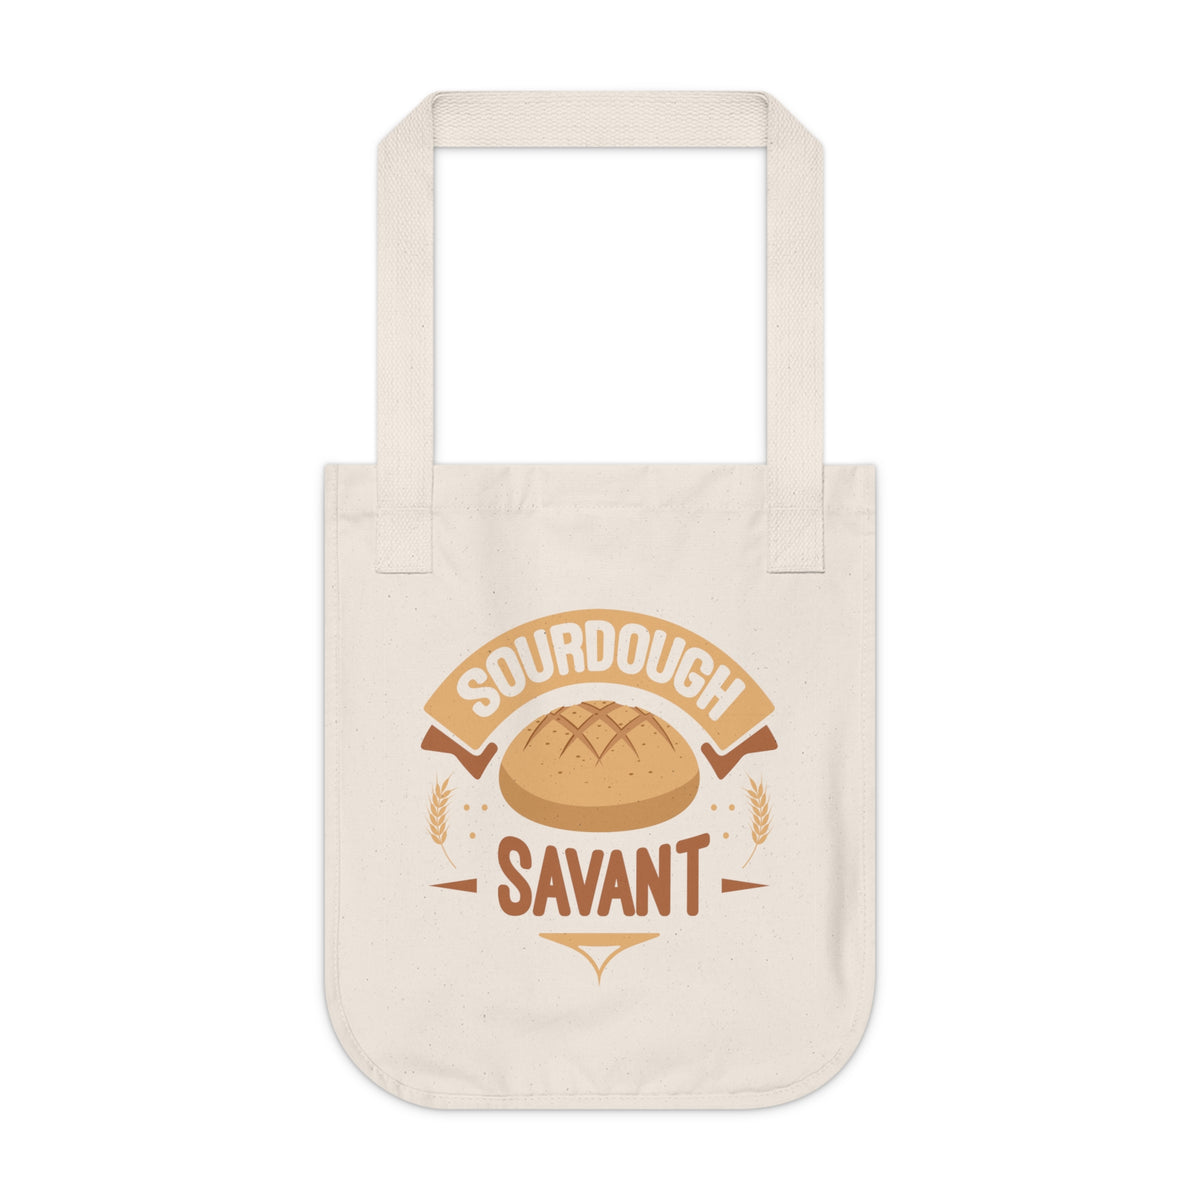 Sourdough Starter Savant Bread Baker Shirt | natural tote bag